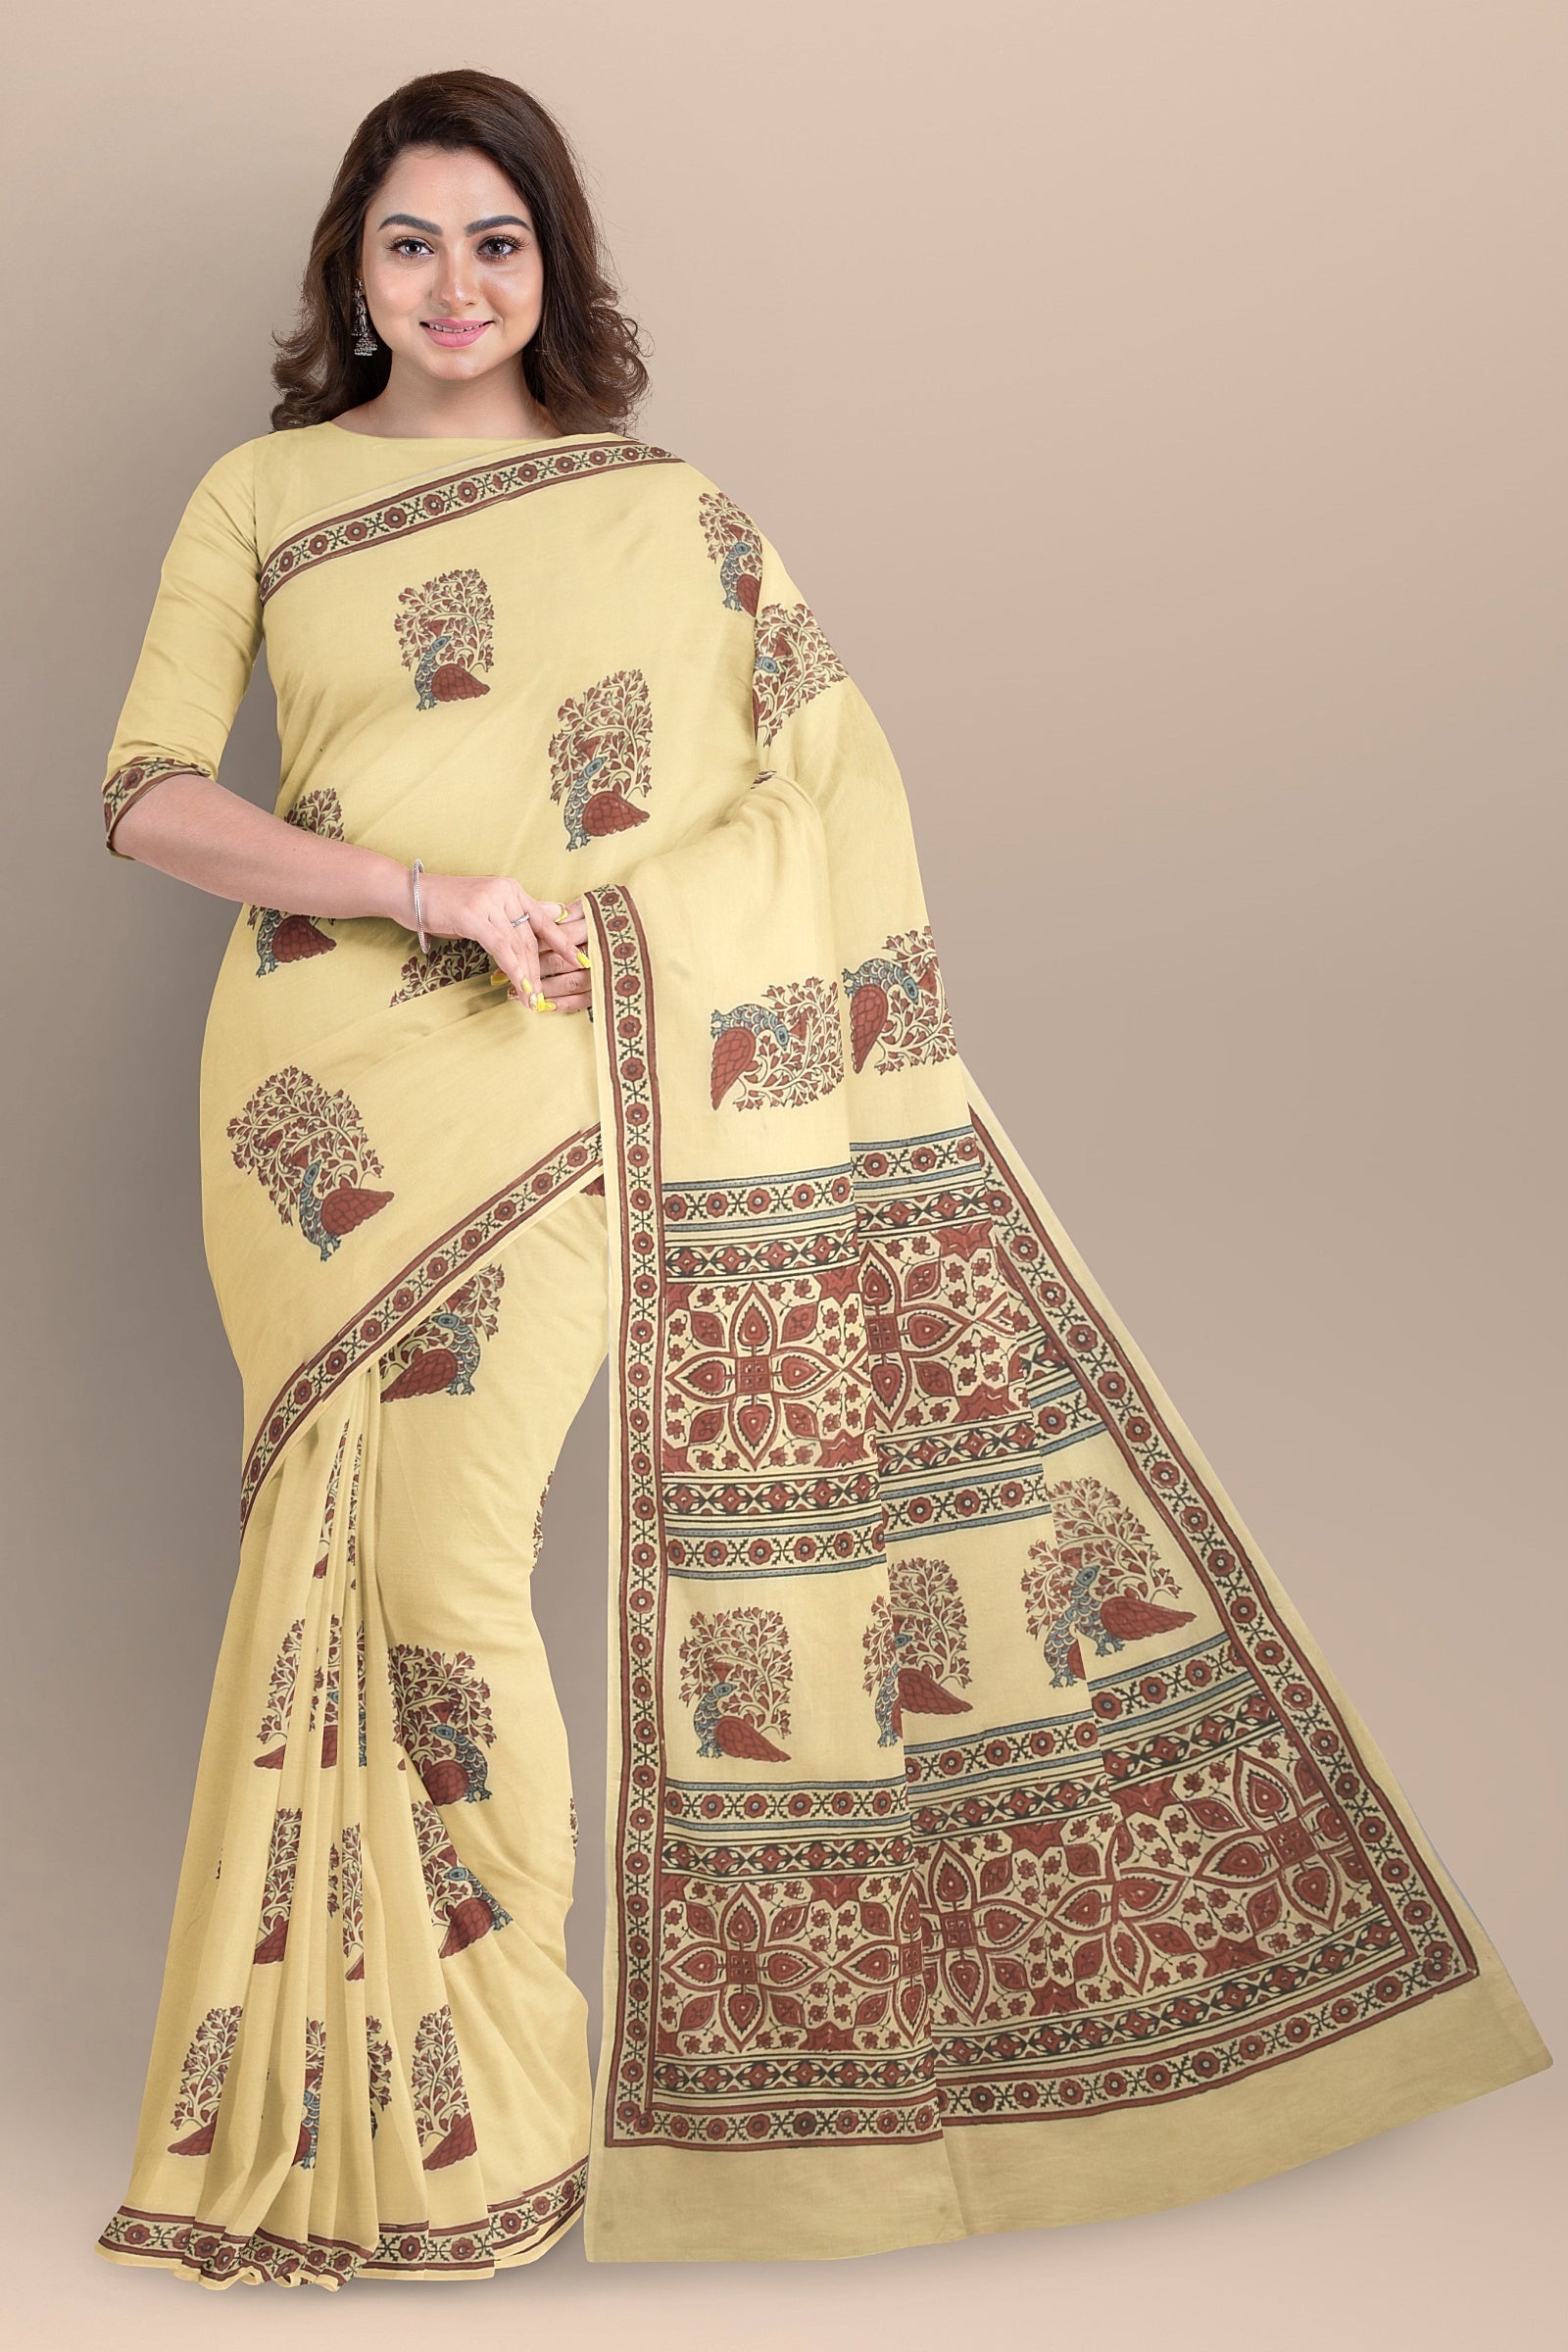 Chhipa Hand Block Printed Parmesean Yellow Color Malmal Cotton Saree With Multicolor Gond Bird Motif SKU-AS10033 - Bhartiya Shilp